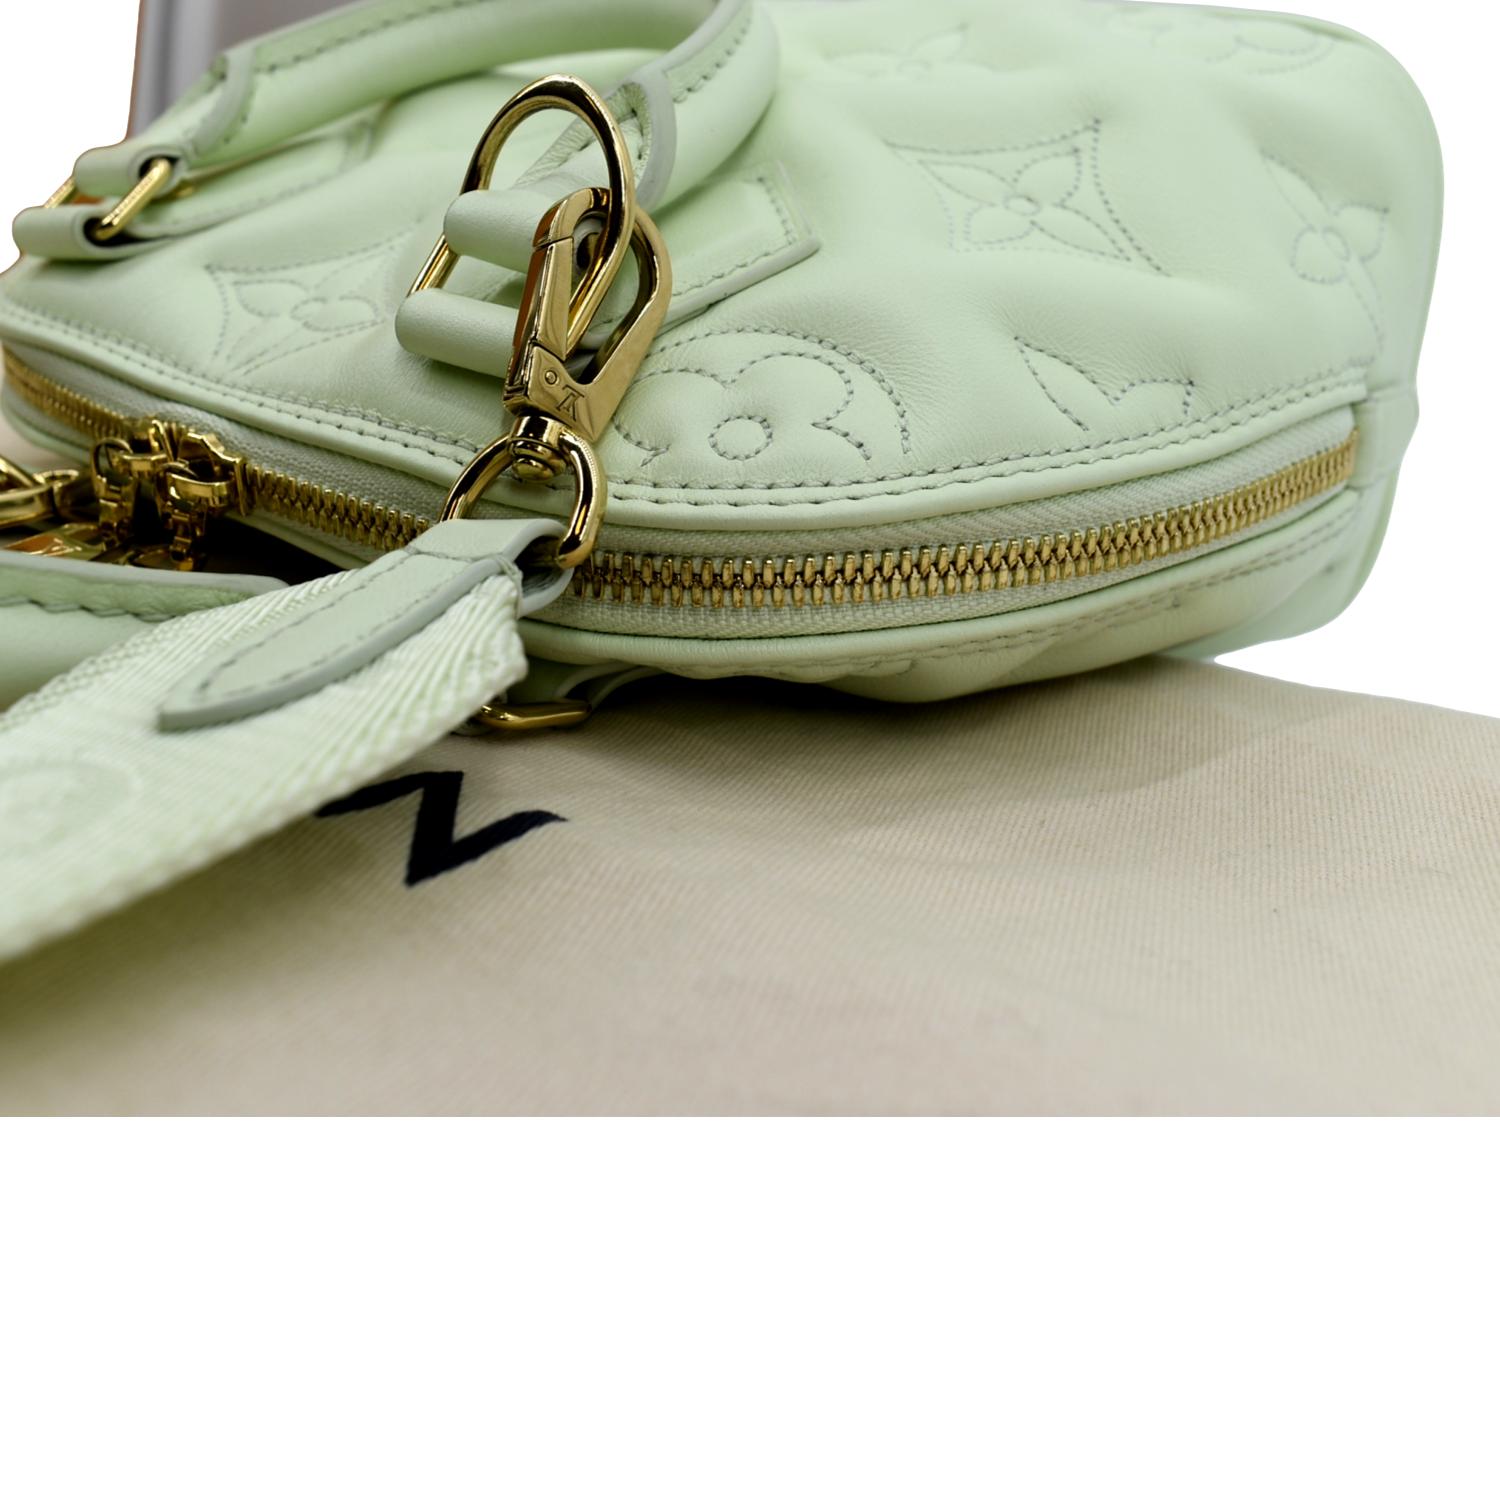 Handbags Louis Vuitton LV Bubblegram Wallet on Strap New